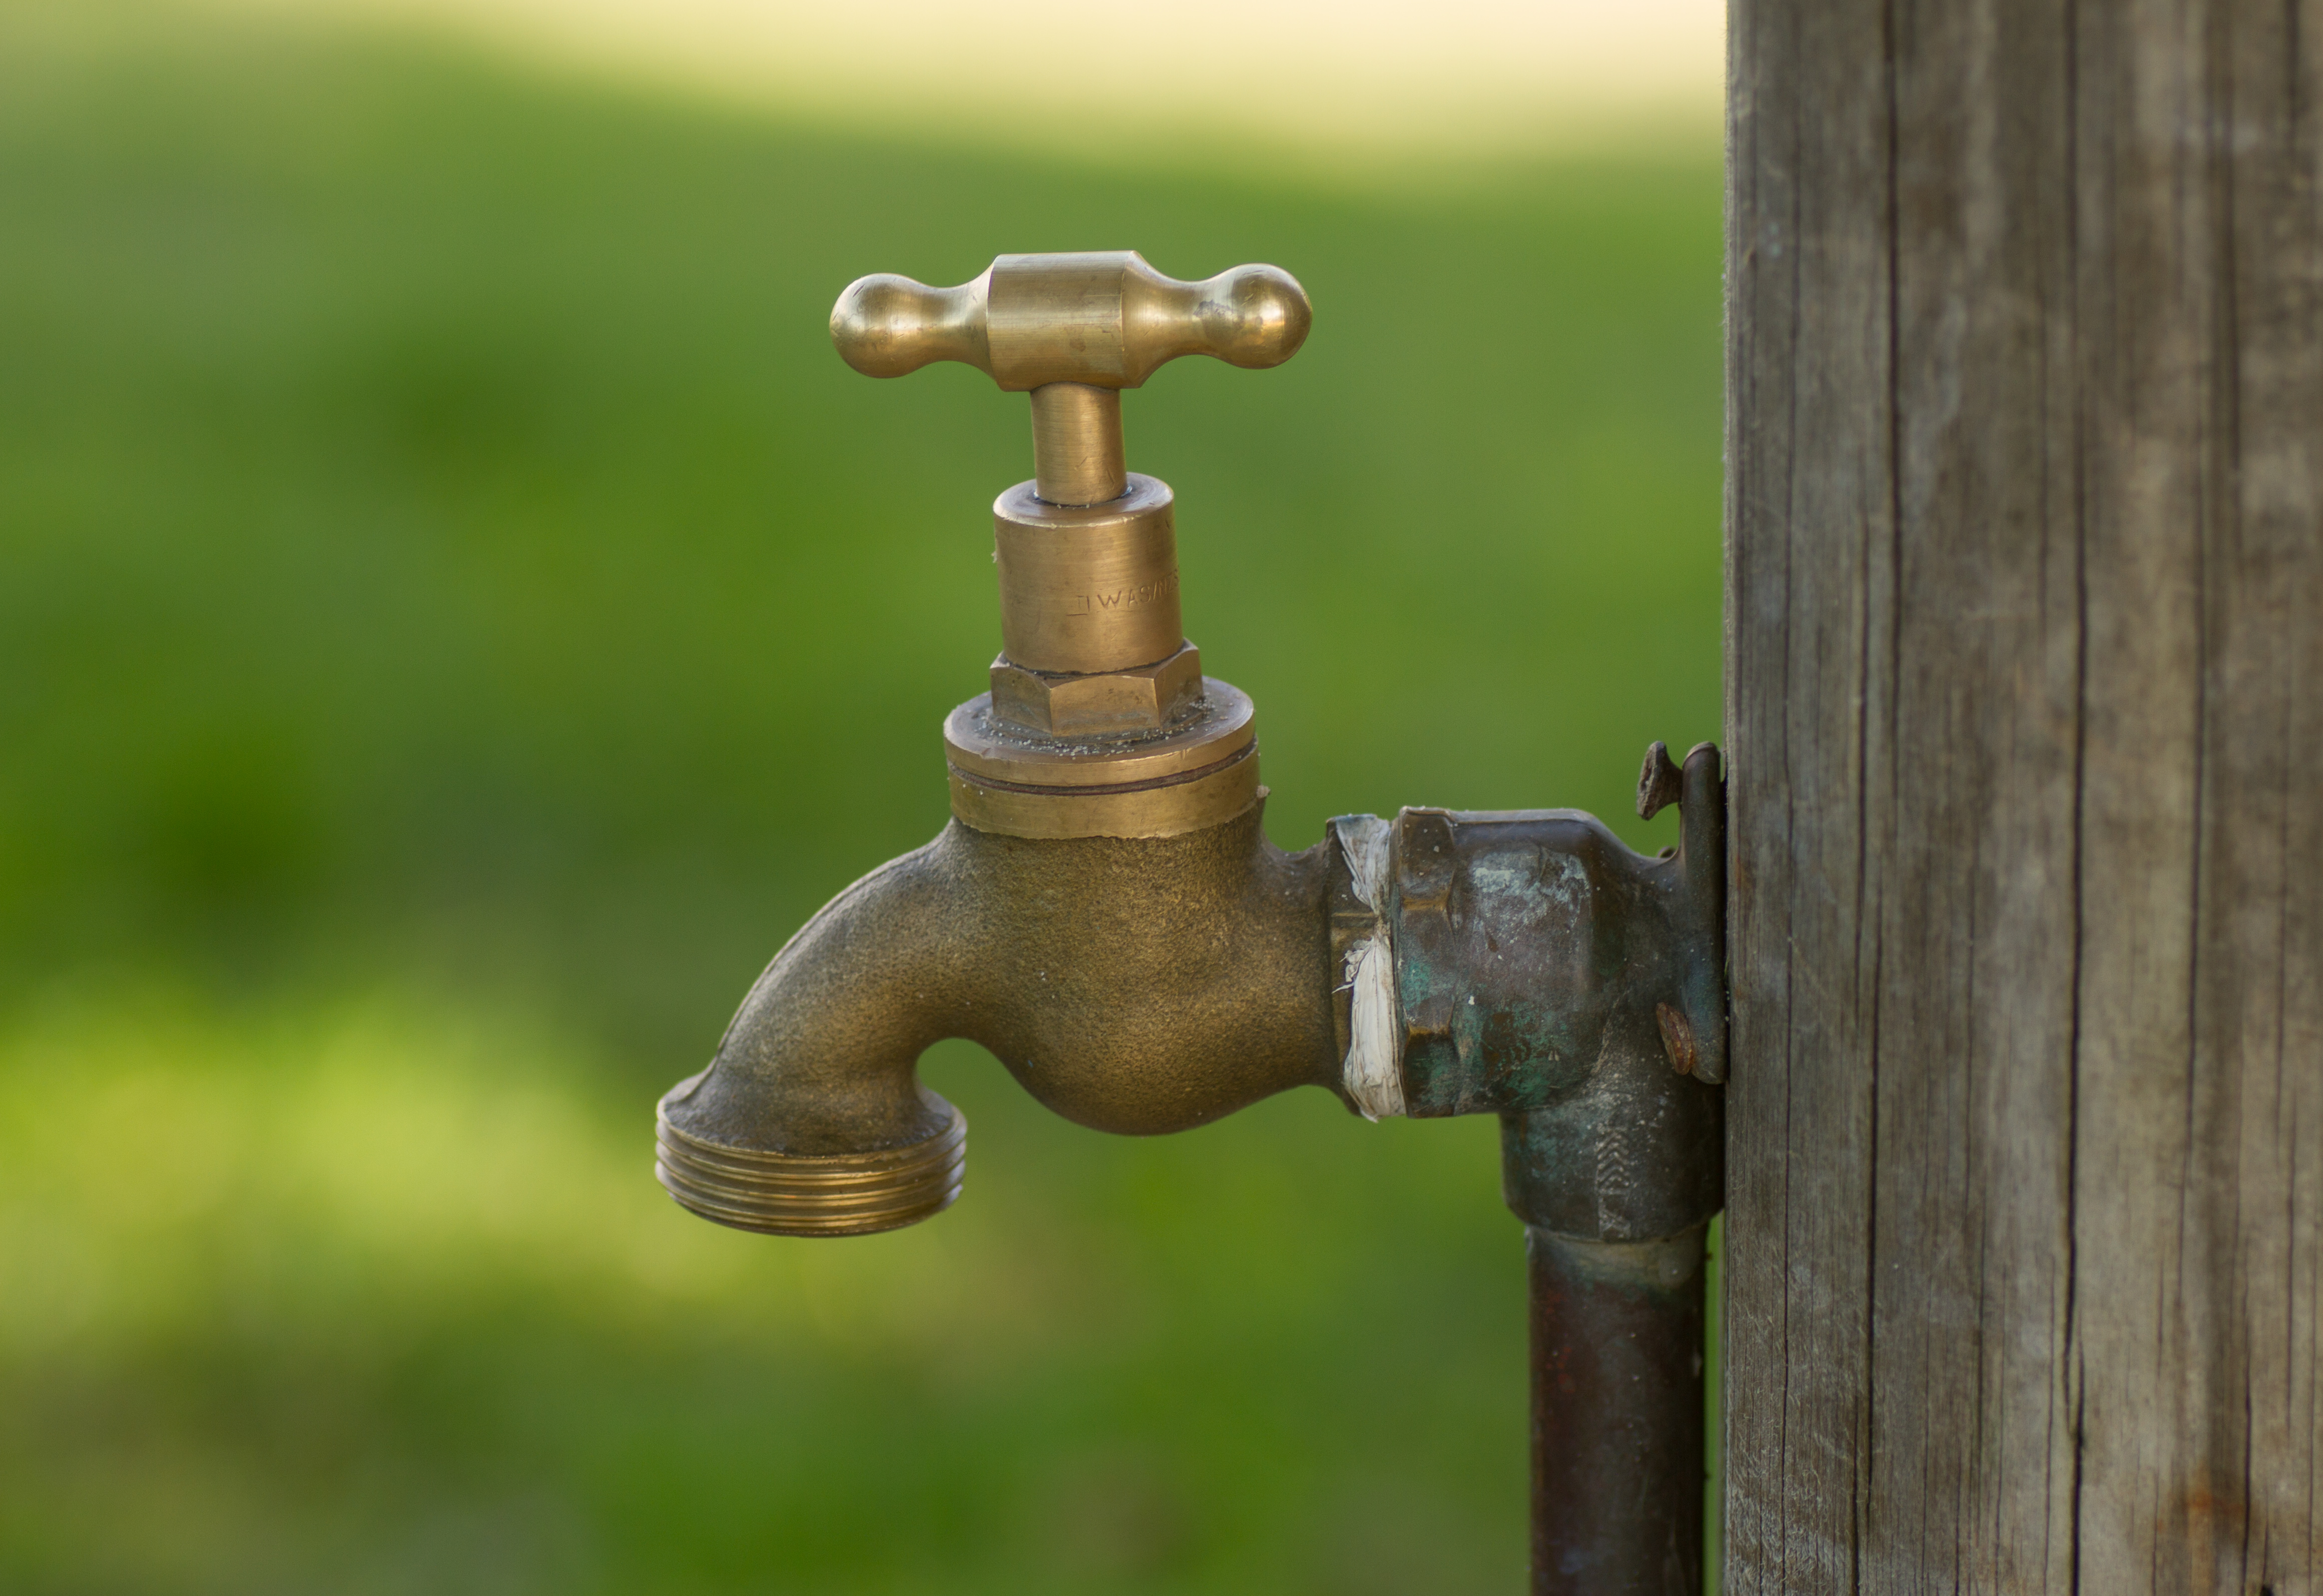 Free photo: Water tap - Flow, Screw, Sink - Free Download ...